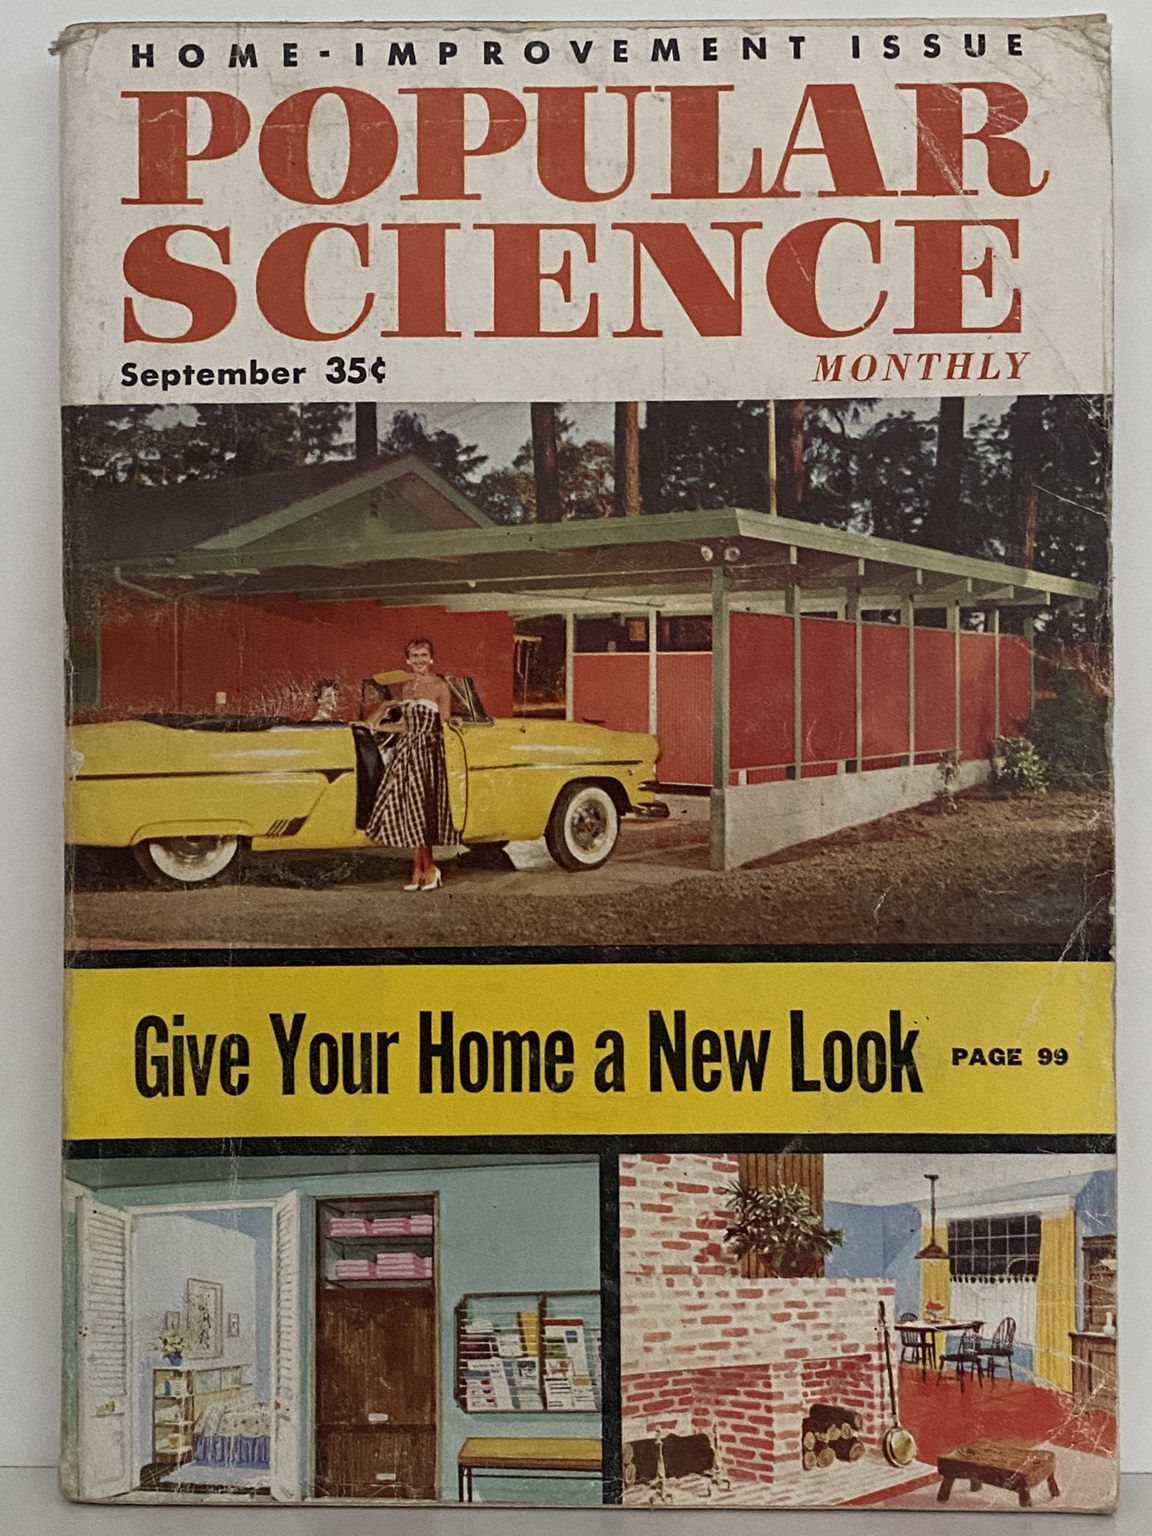 VINTAGE MAGAZINE: Popular Science, Vol. 167, No. 3 - September 1955